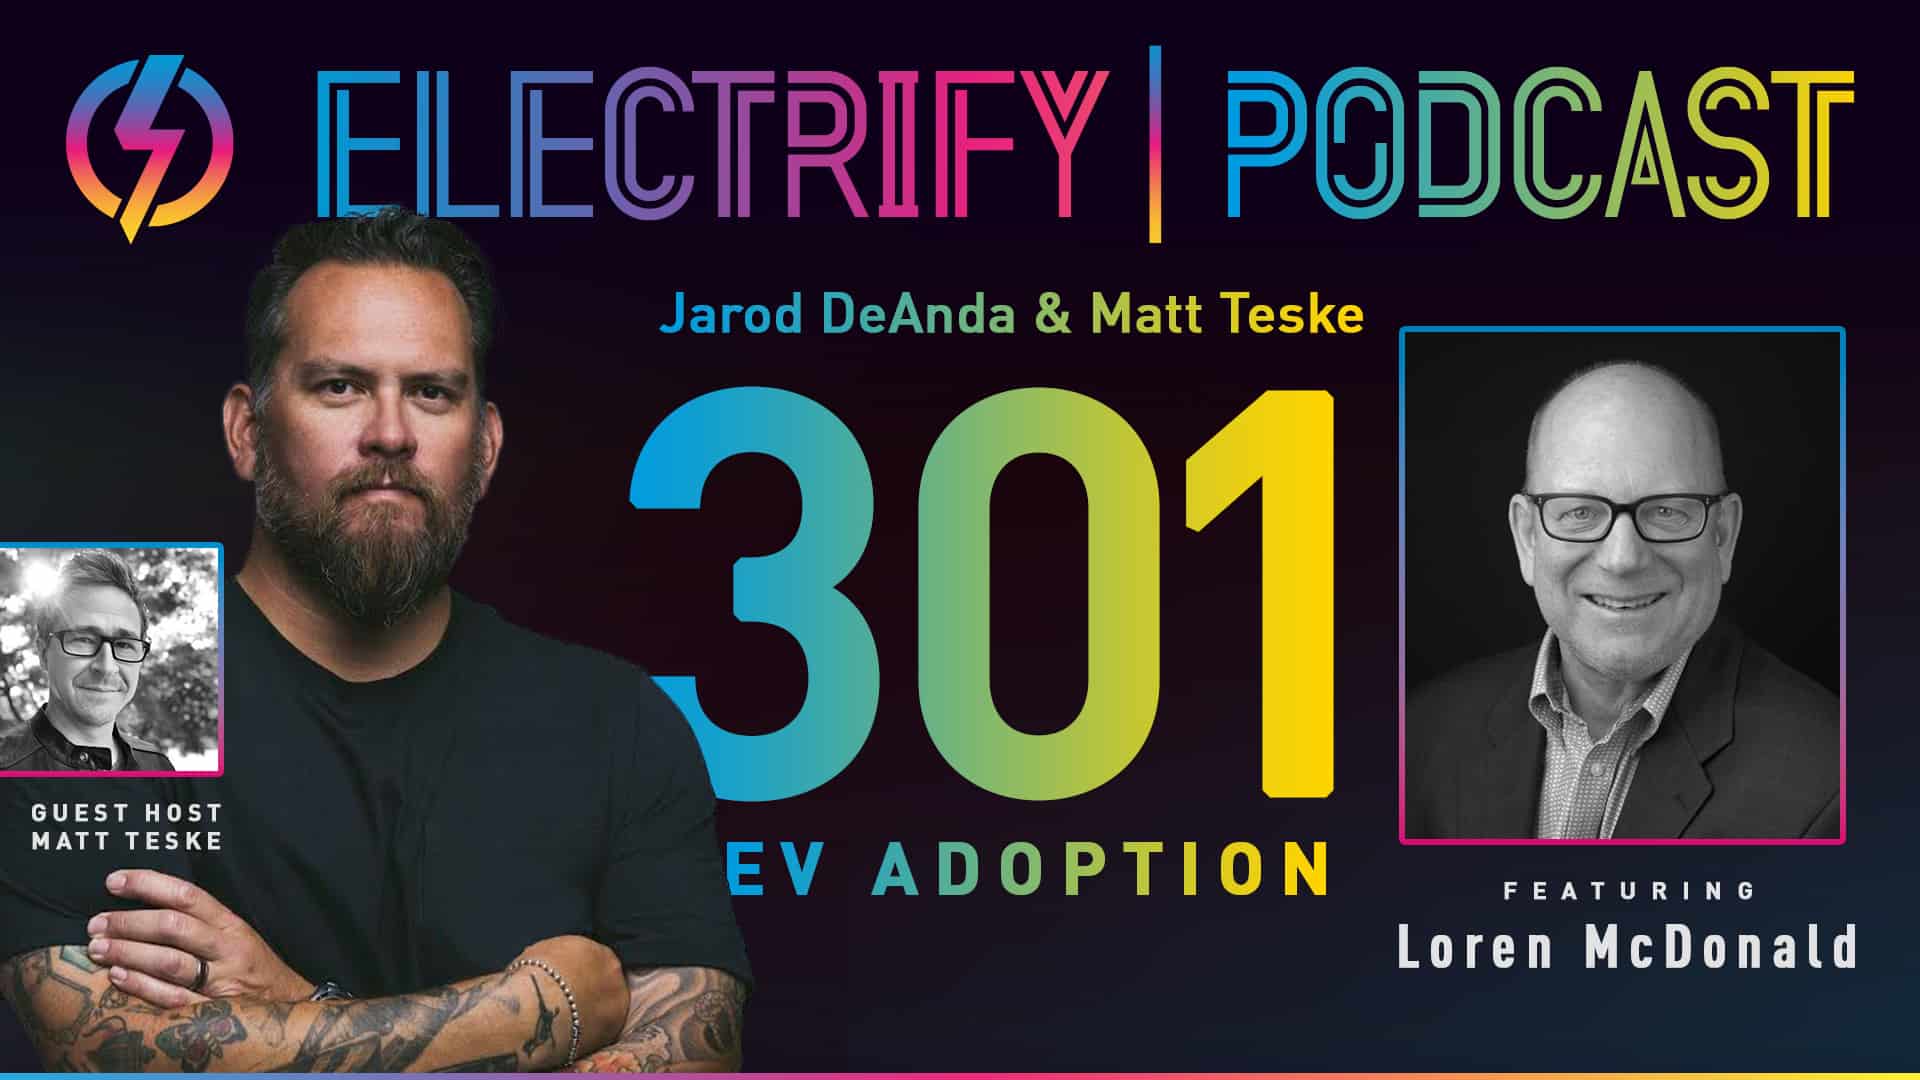 Image showcasing Electrify Podcast episode 301 titled EV Adoption with host Jarod DeAnda, guest co-host Matt Teske of Chargeway, and guest Loren McDonald of EVAdoption